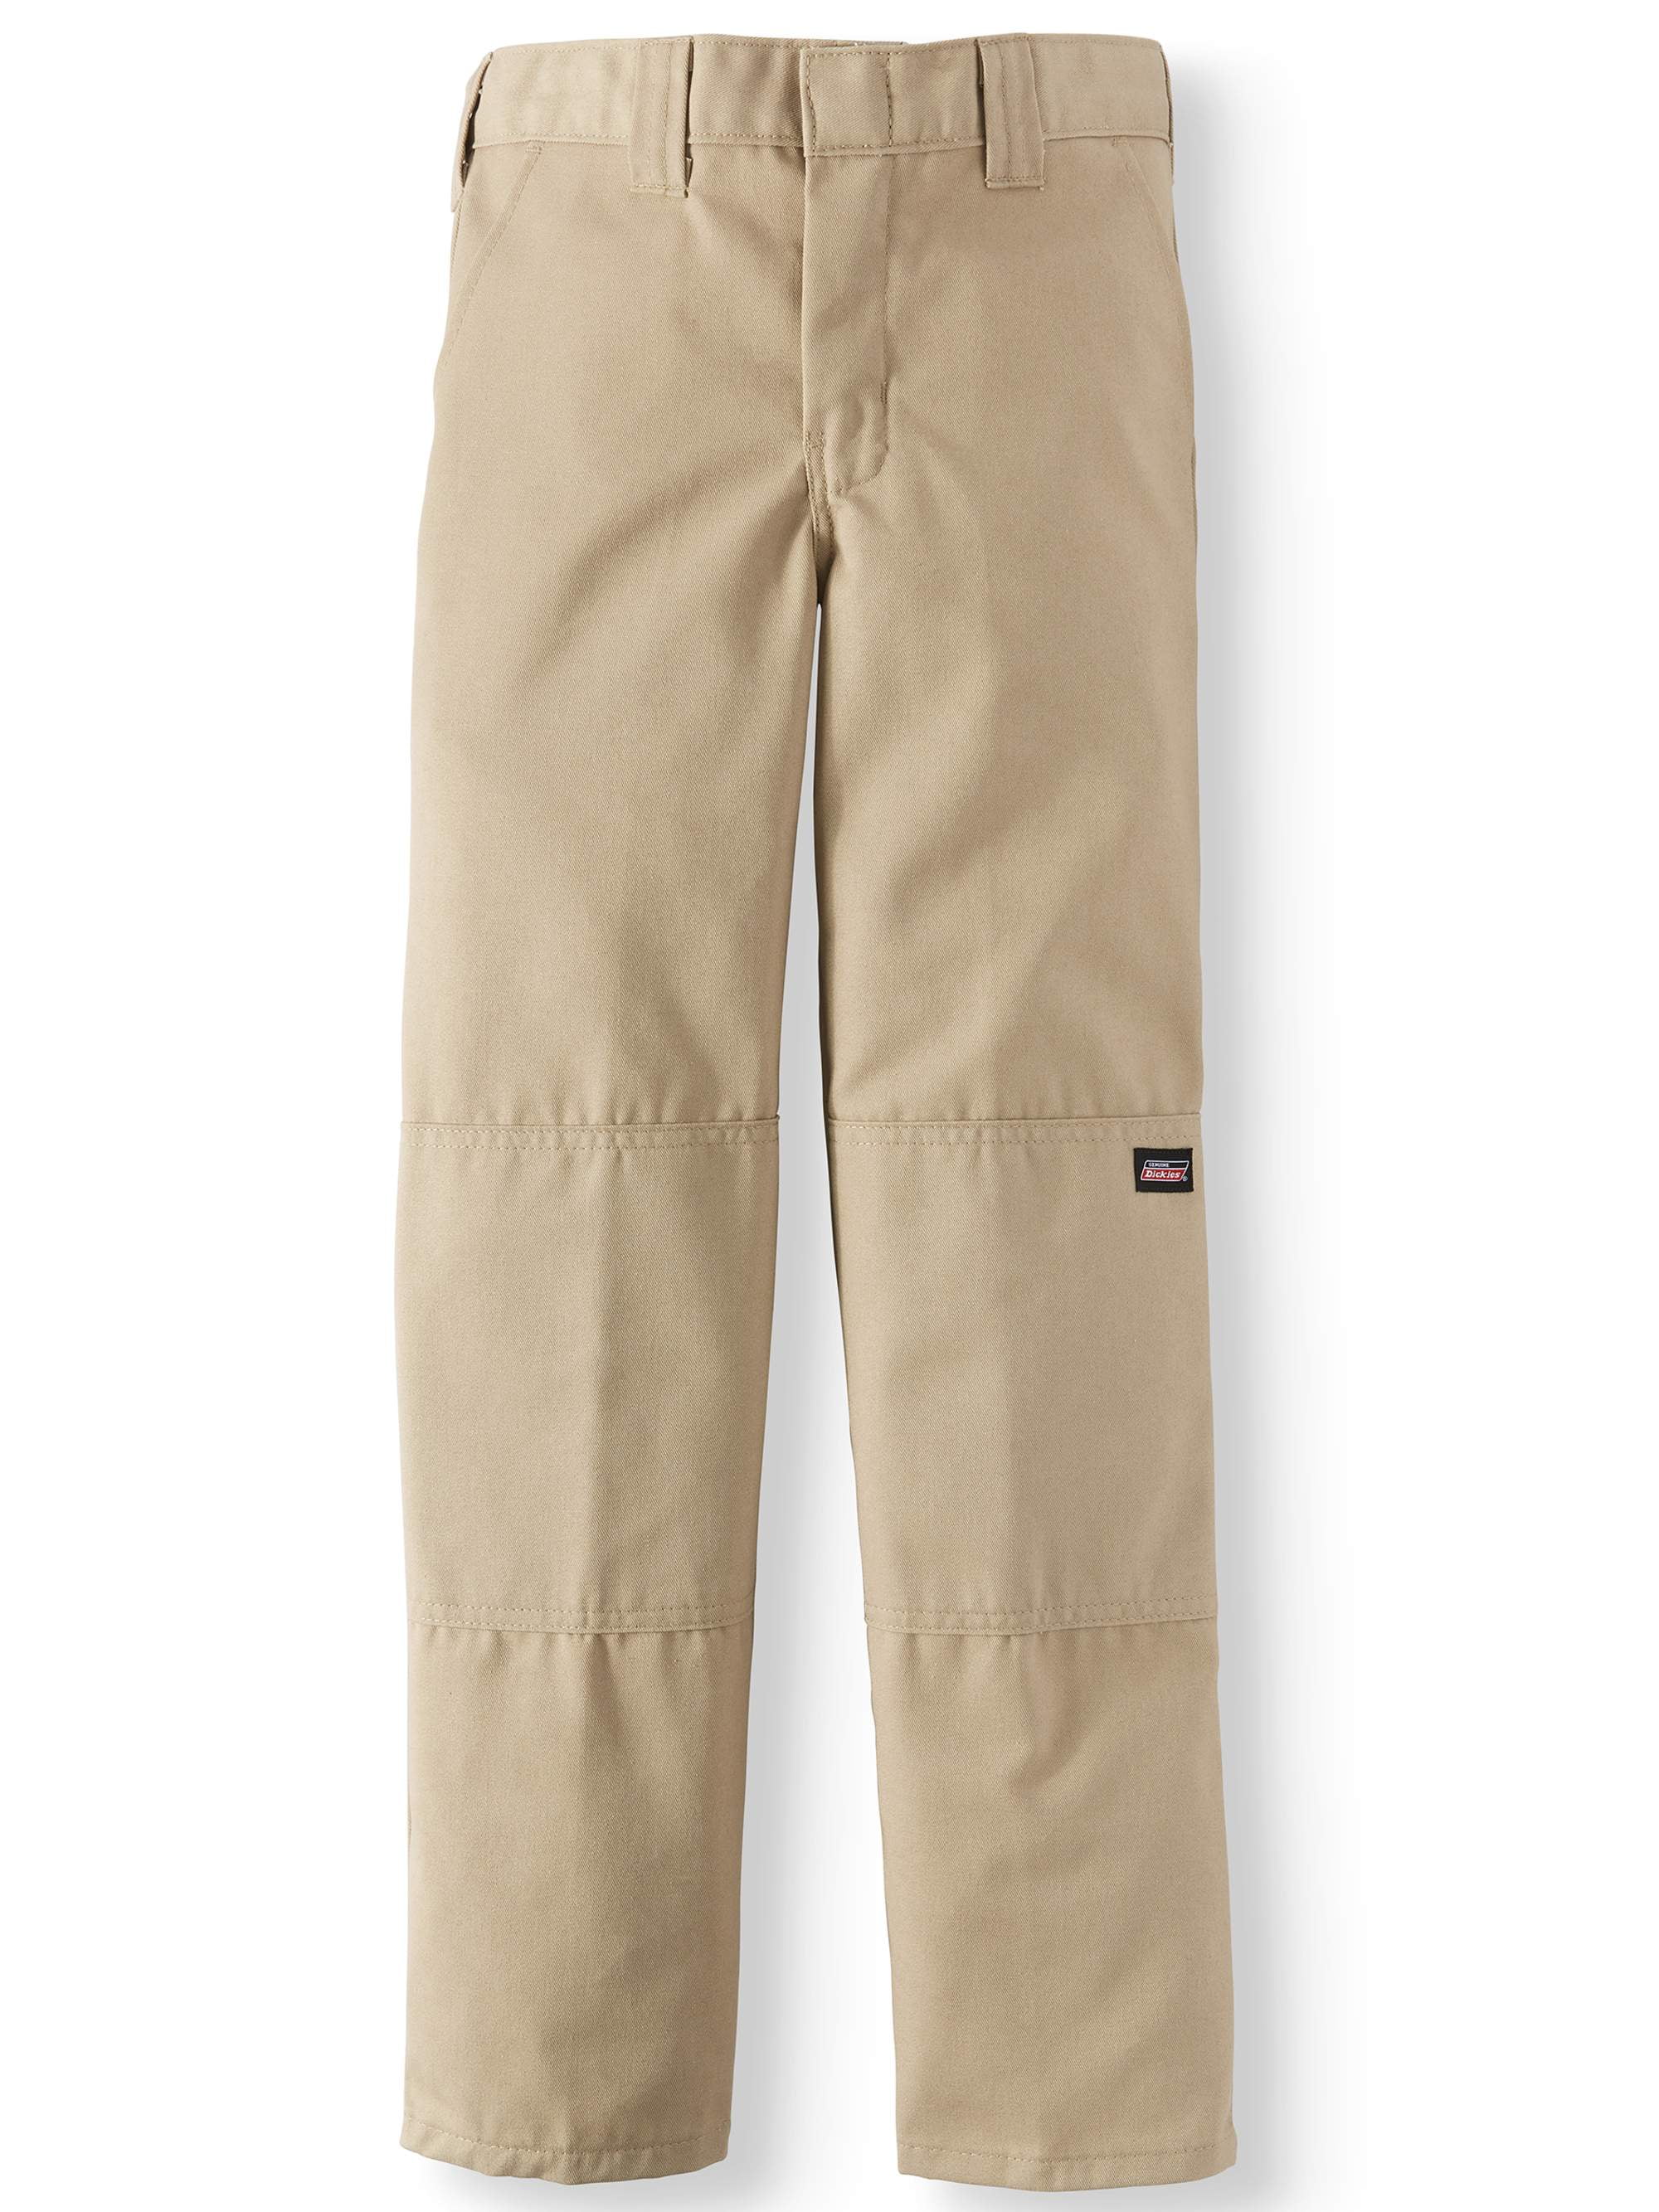 Genuine Dickies Boys School Uniform Double-Knee Multi Pocket Pants, Sizes 4-18, Slim, & Husky - Walmart.com